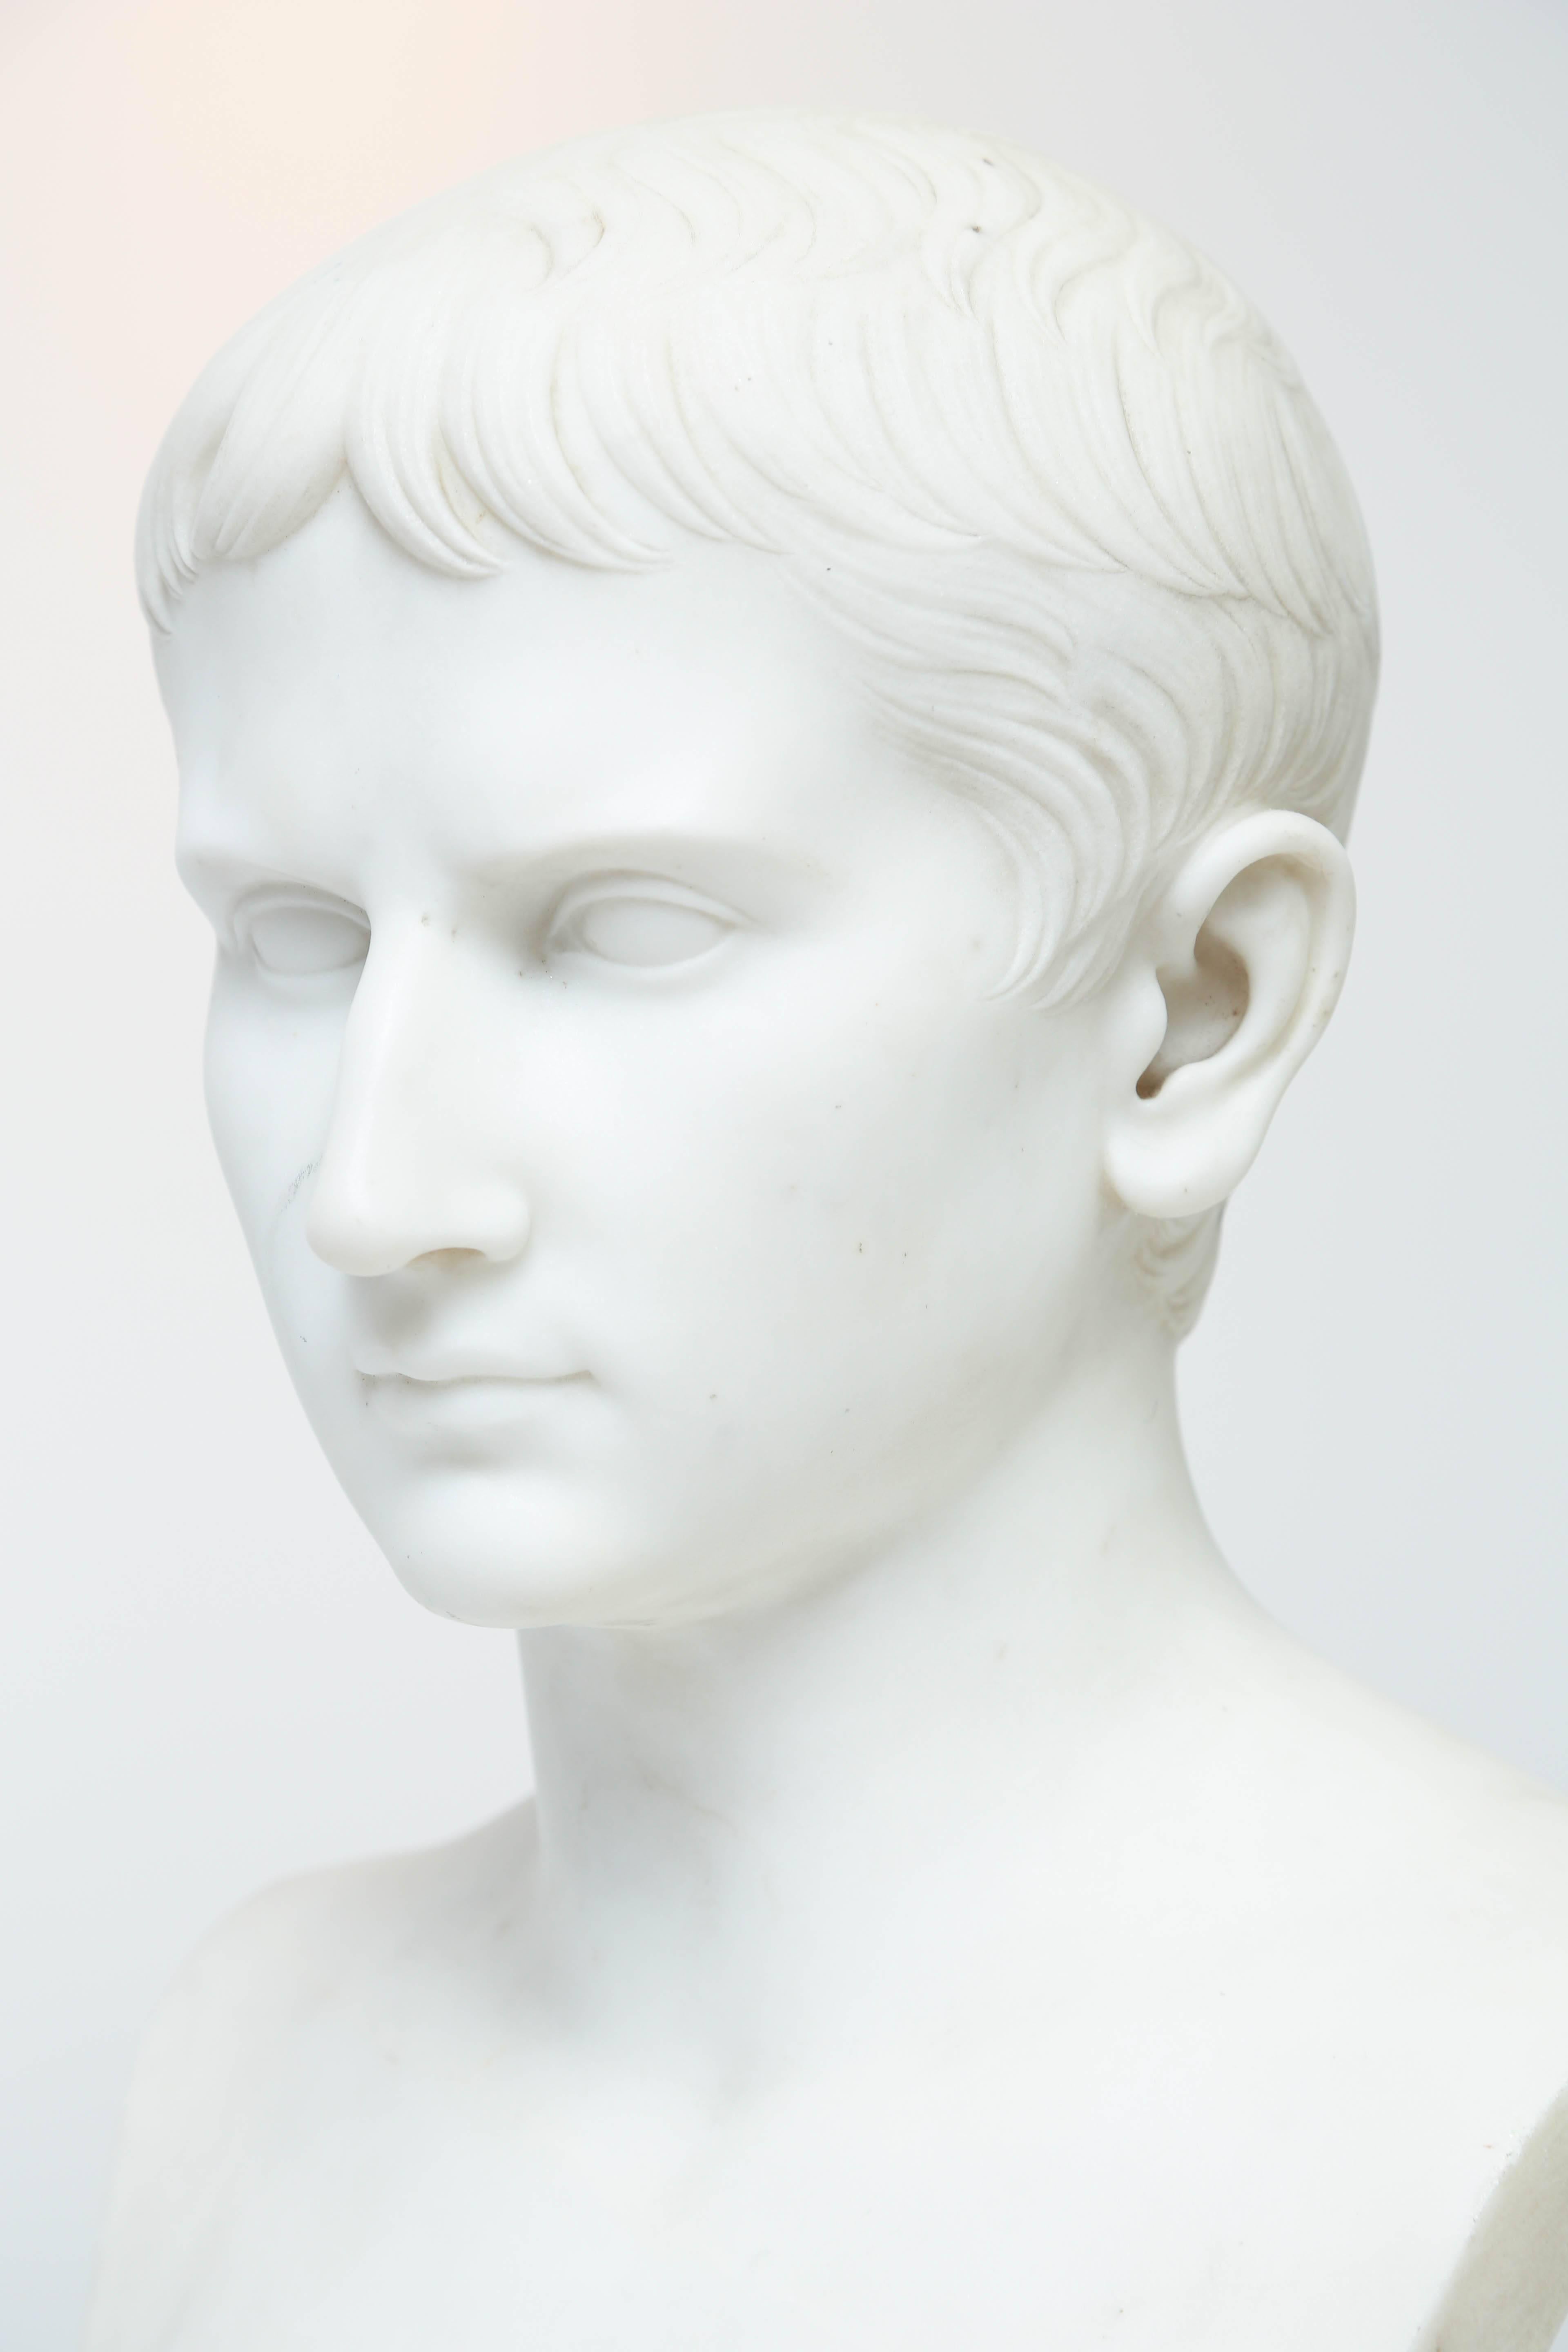 caesar marble bust